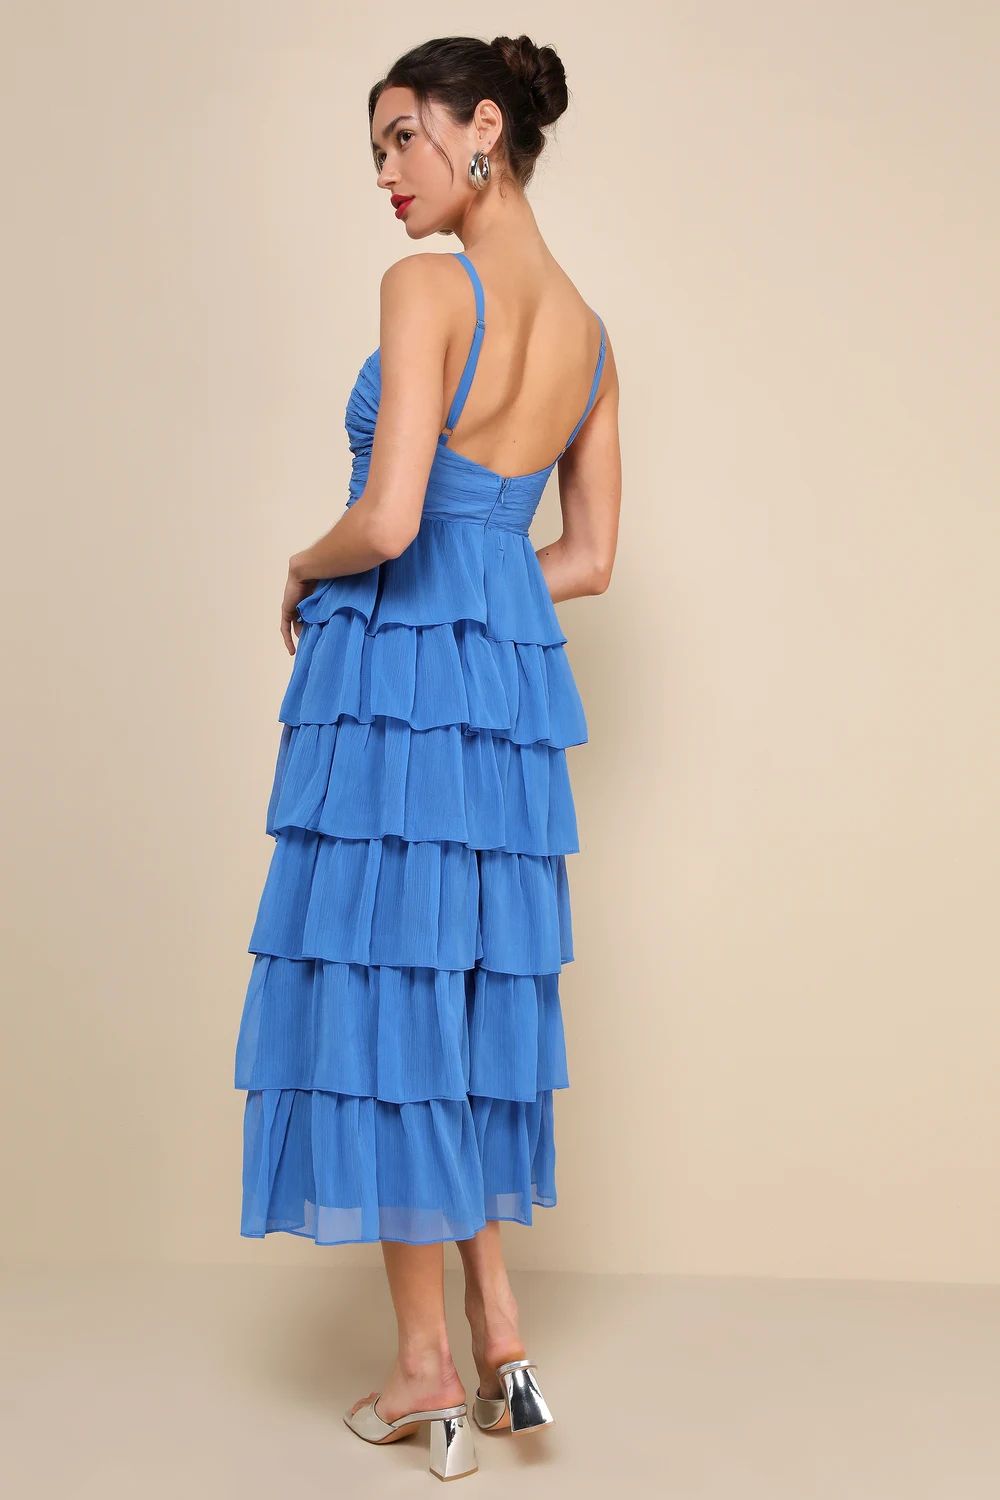 Poised Impression Blue Tiered Ruffled Cutout Midi Dress | Lulus